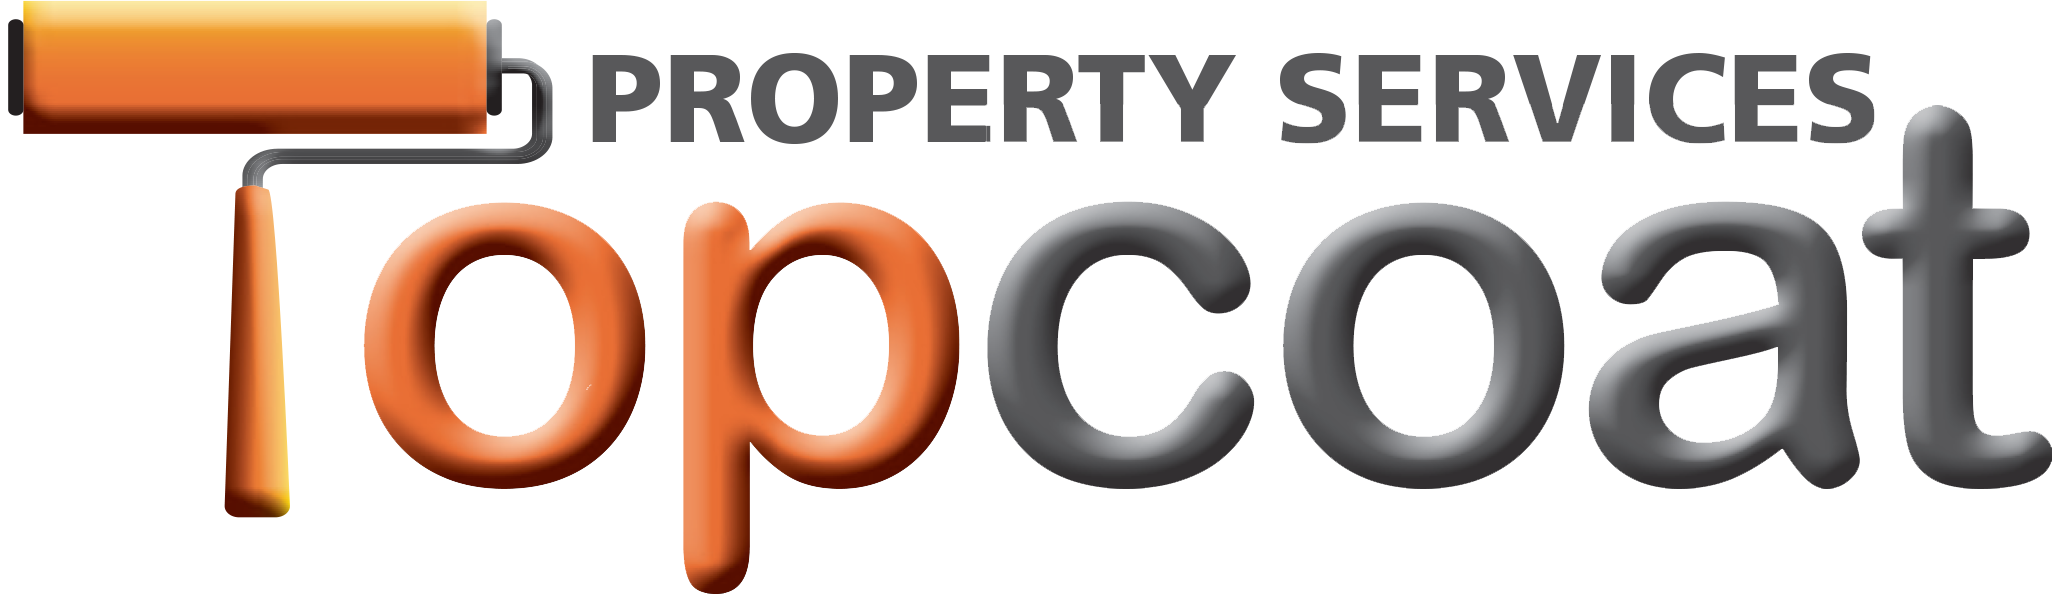 Top Coat Property Services Spain